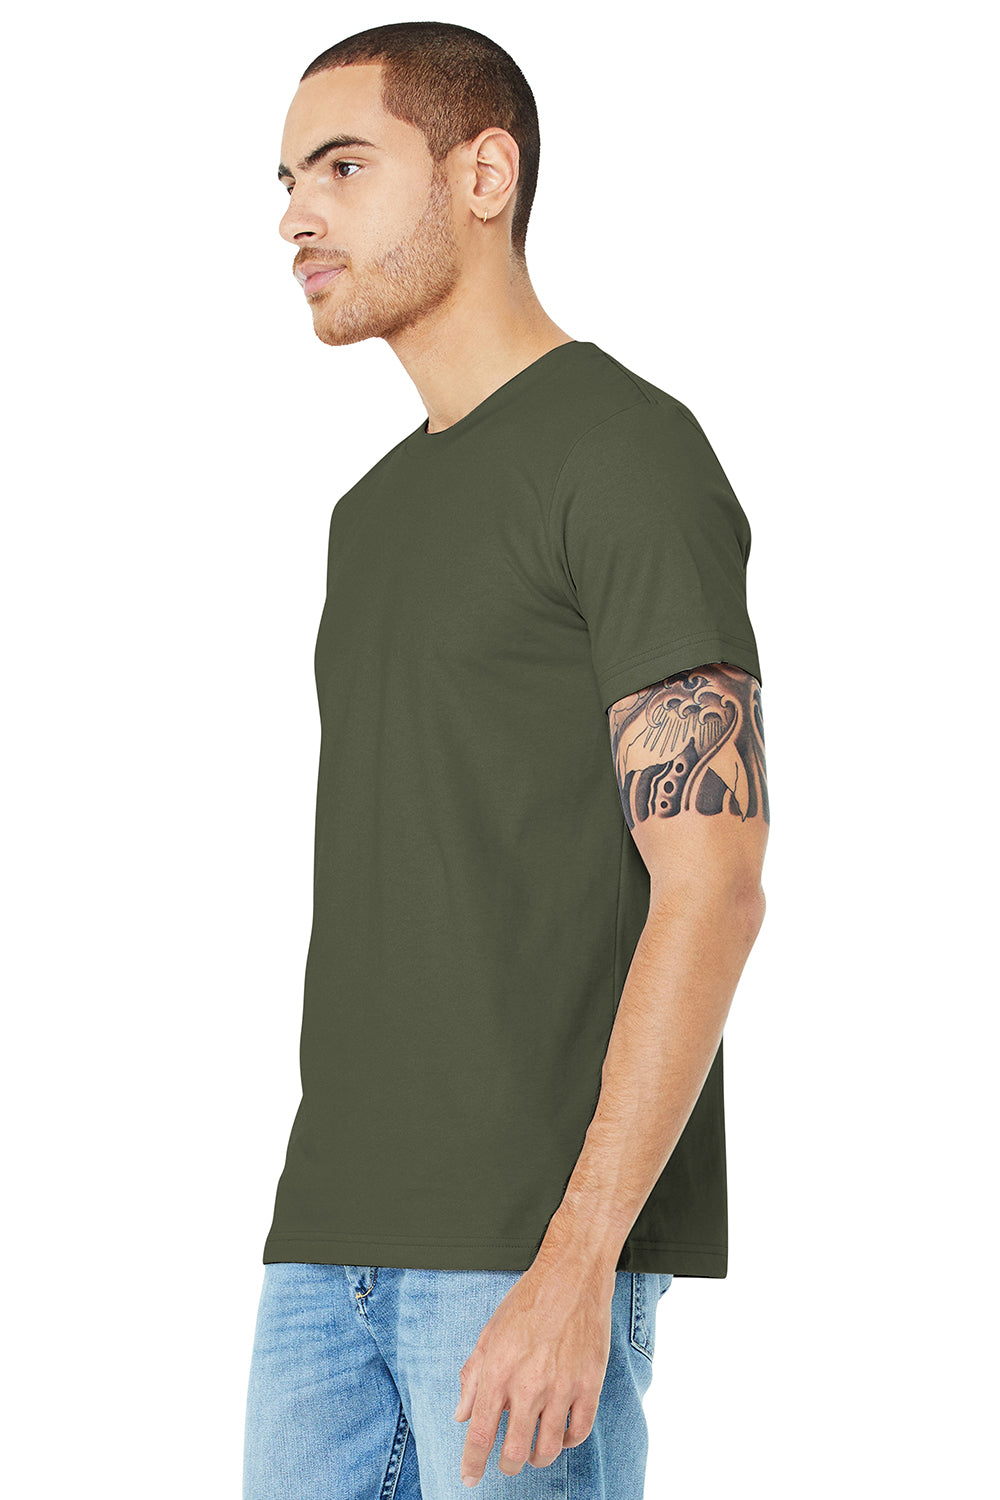 Bella + Canvas BC3001/3001C Mens Jersey Short Sleeve Crewneck T-Shirt Army Green Model 3Q